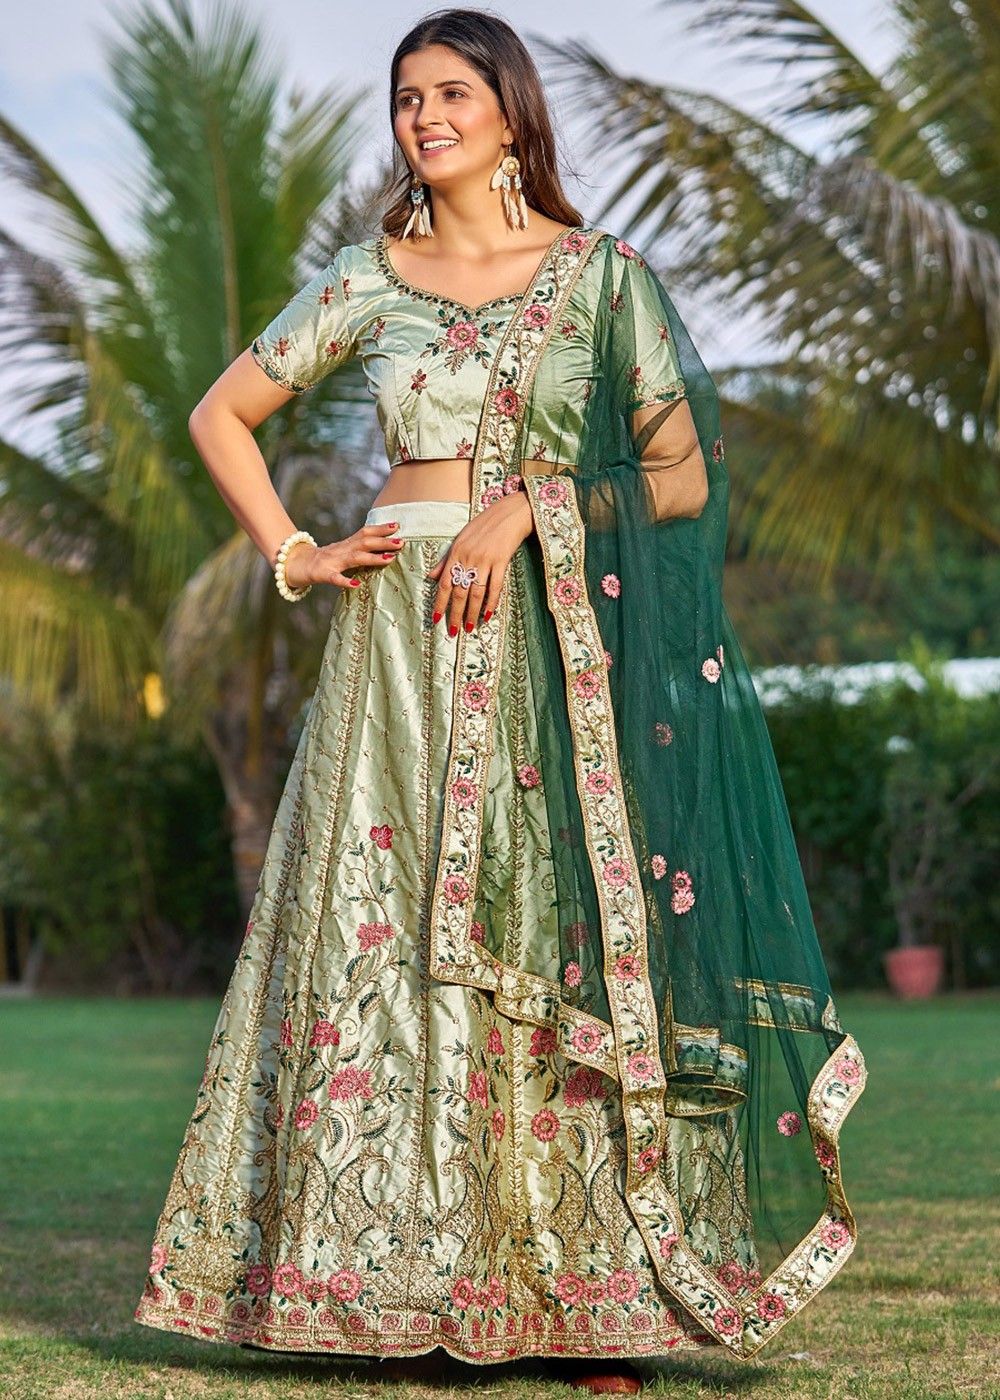 Light Green Net Fabric Embroidered Lehenga Choli Lc 62 at 2500.00 INR in  Surat | Brightwin Fashion